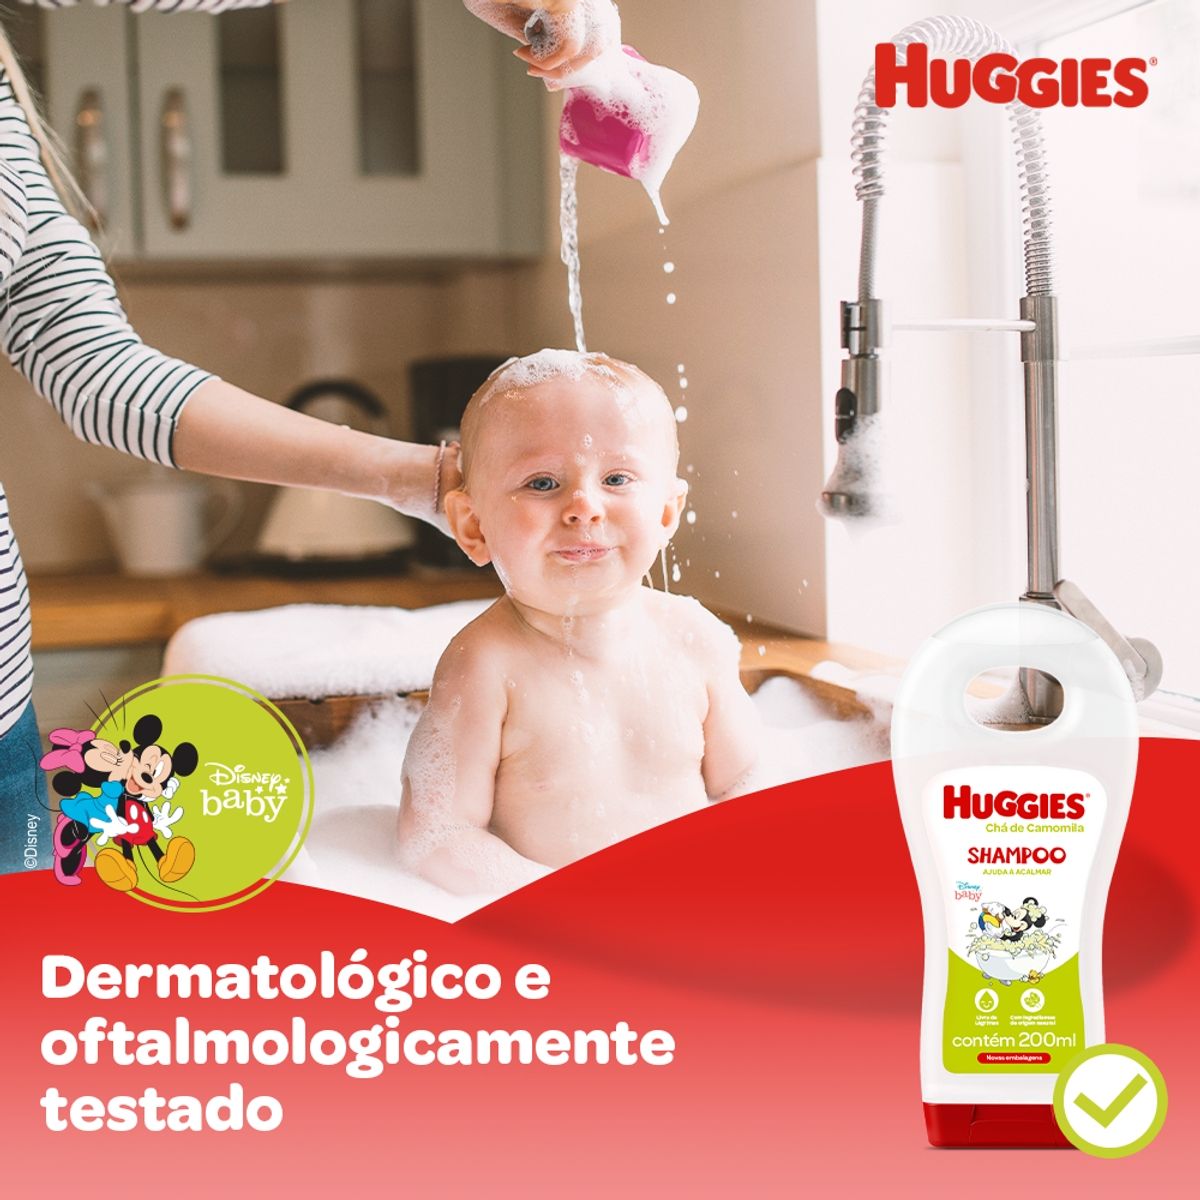 Shampoo Huggies Chá de Camomila - 200 ml image number 5